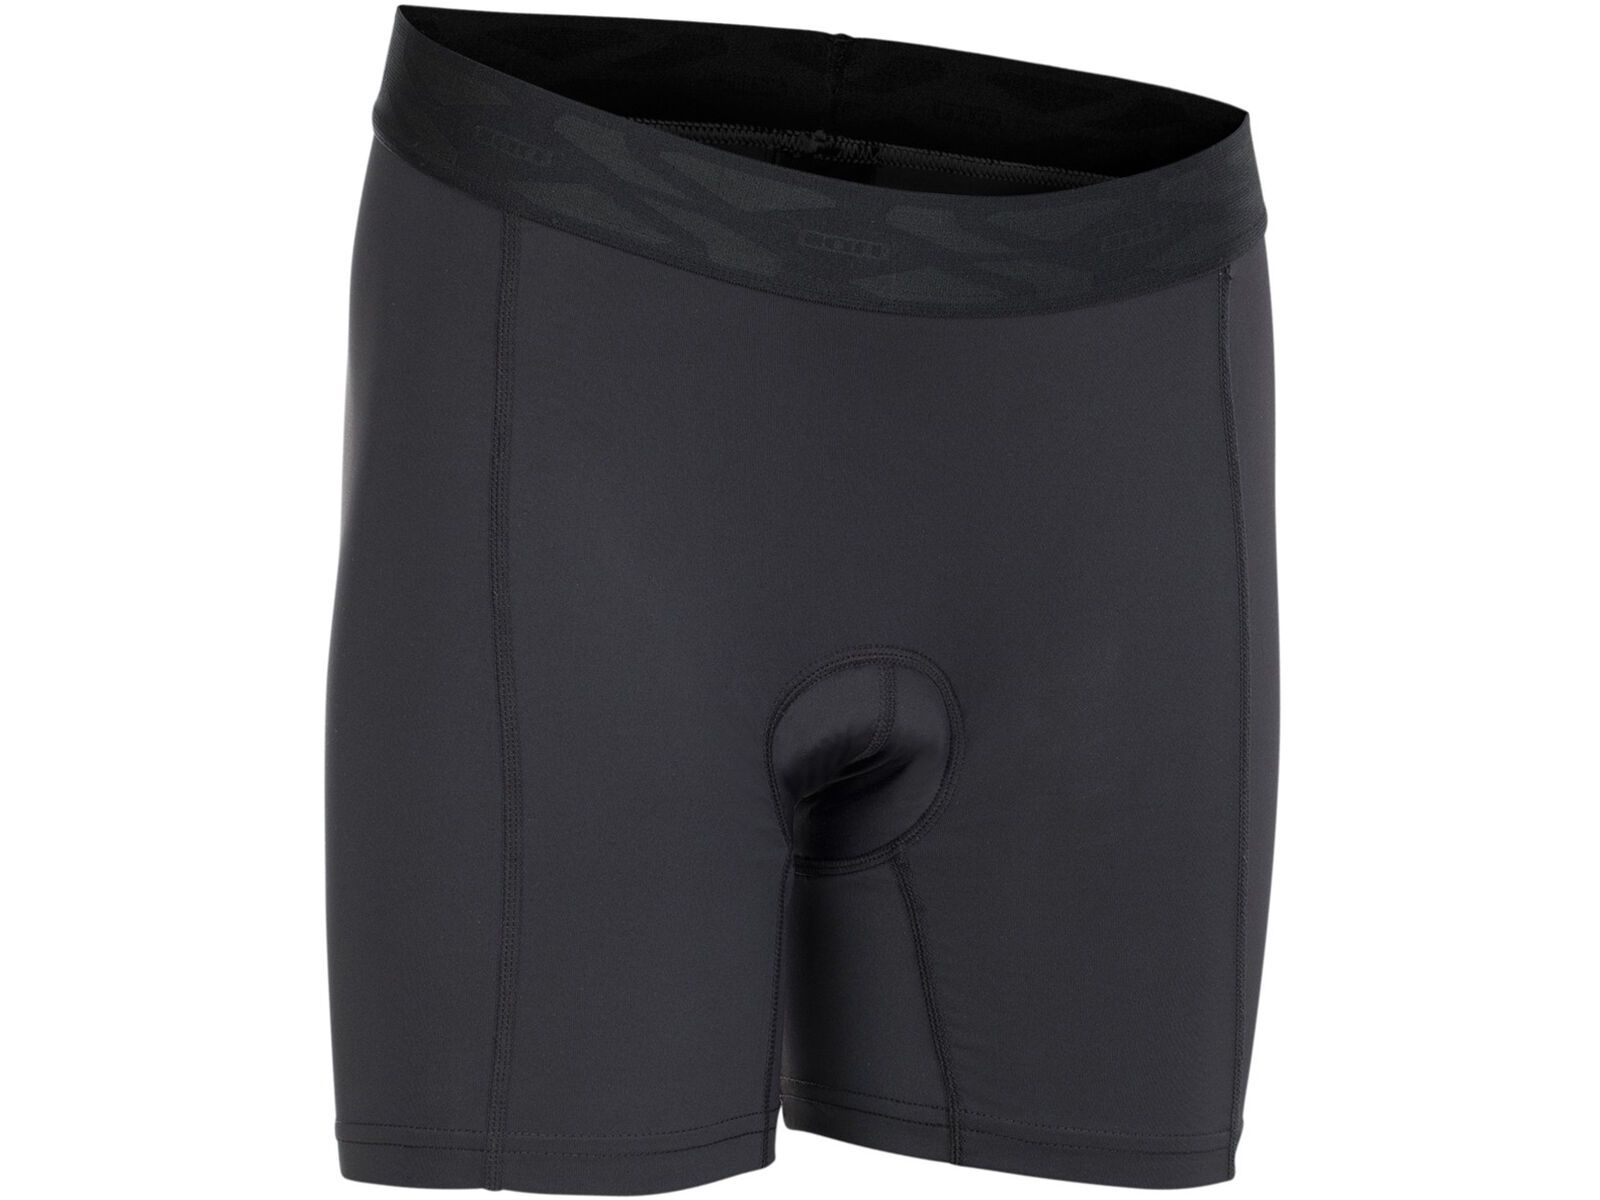 ION In-Shorts Short Wms, black | Bild 1